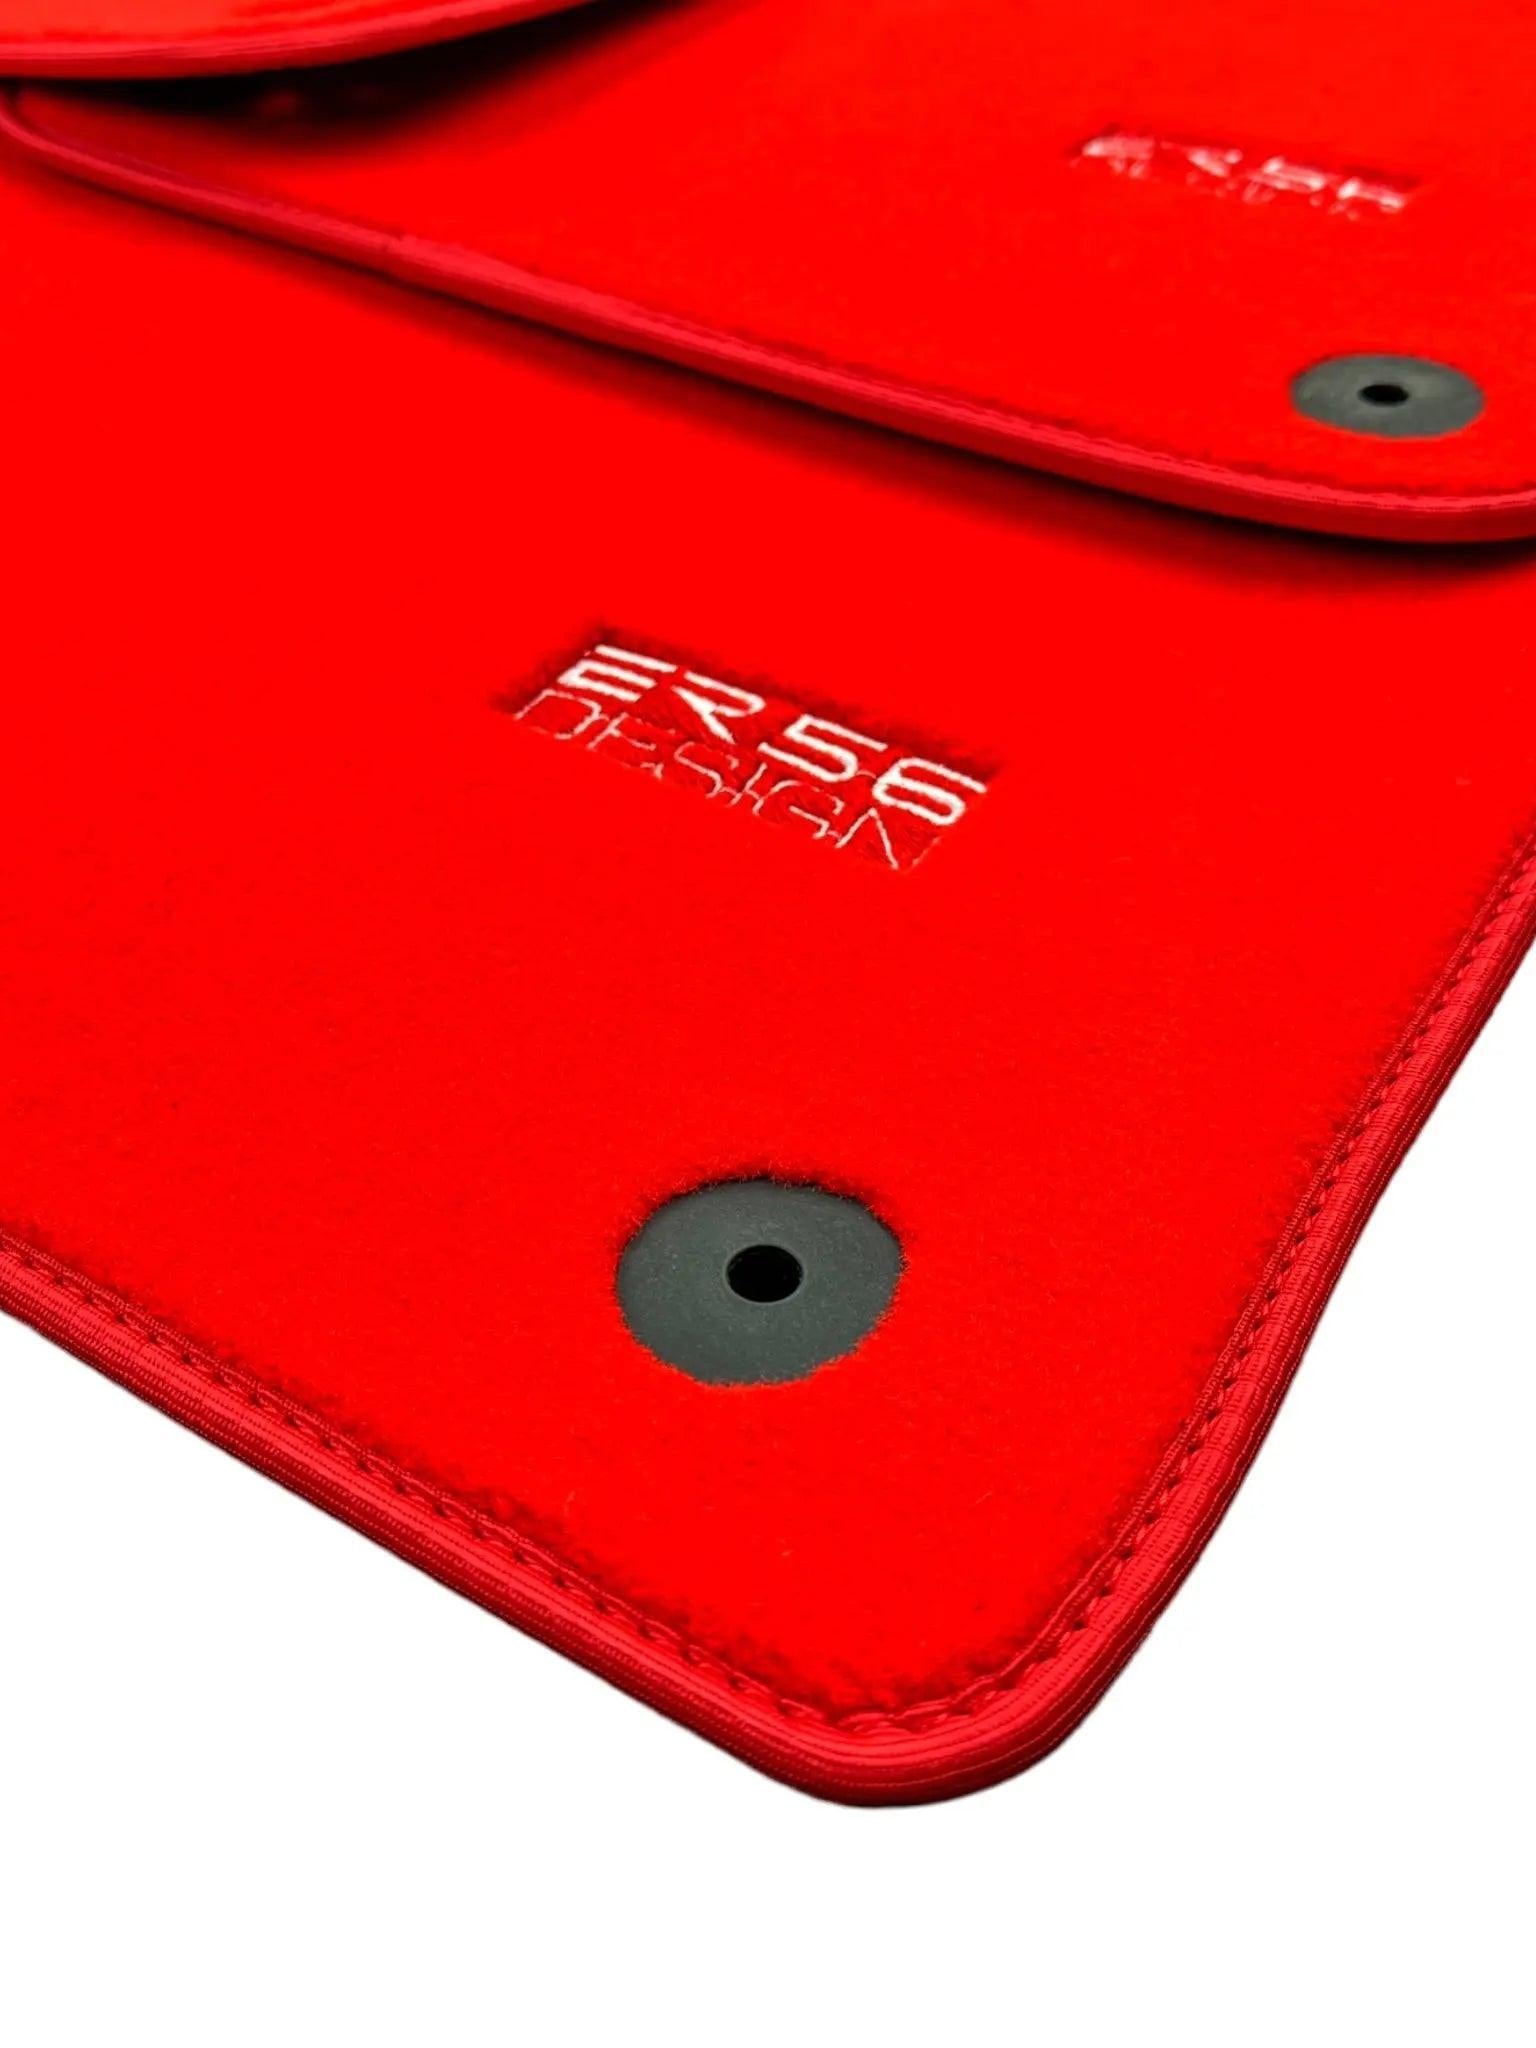 Red Floor Mats for Audi A8 D5 Long (2017-2023) | ER56 Design